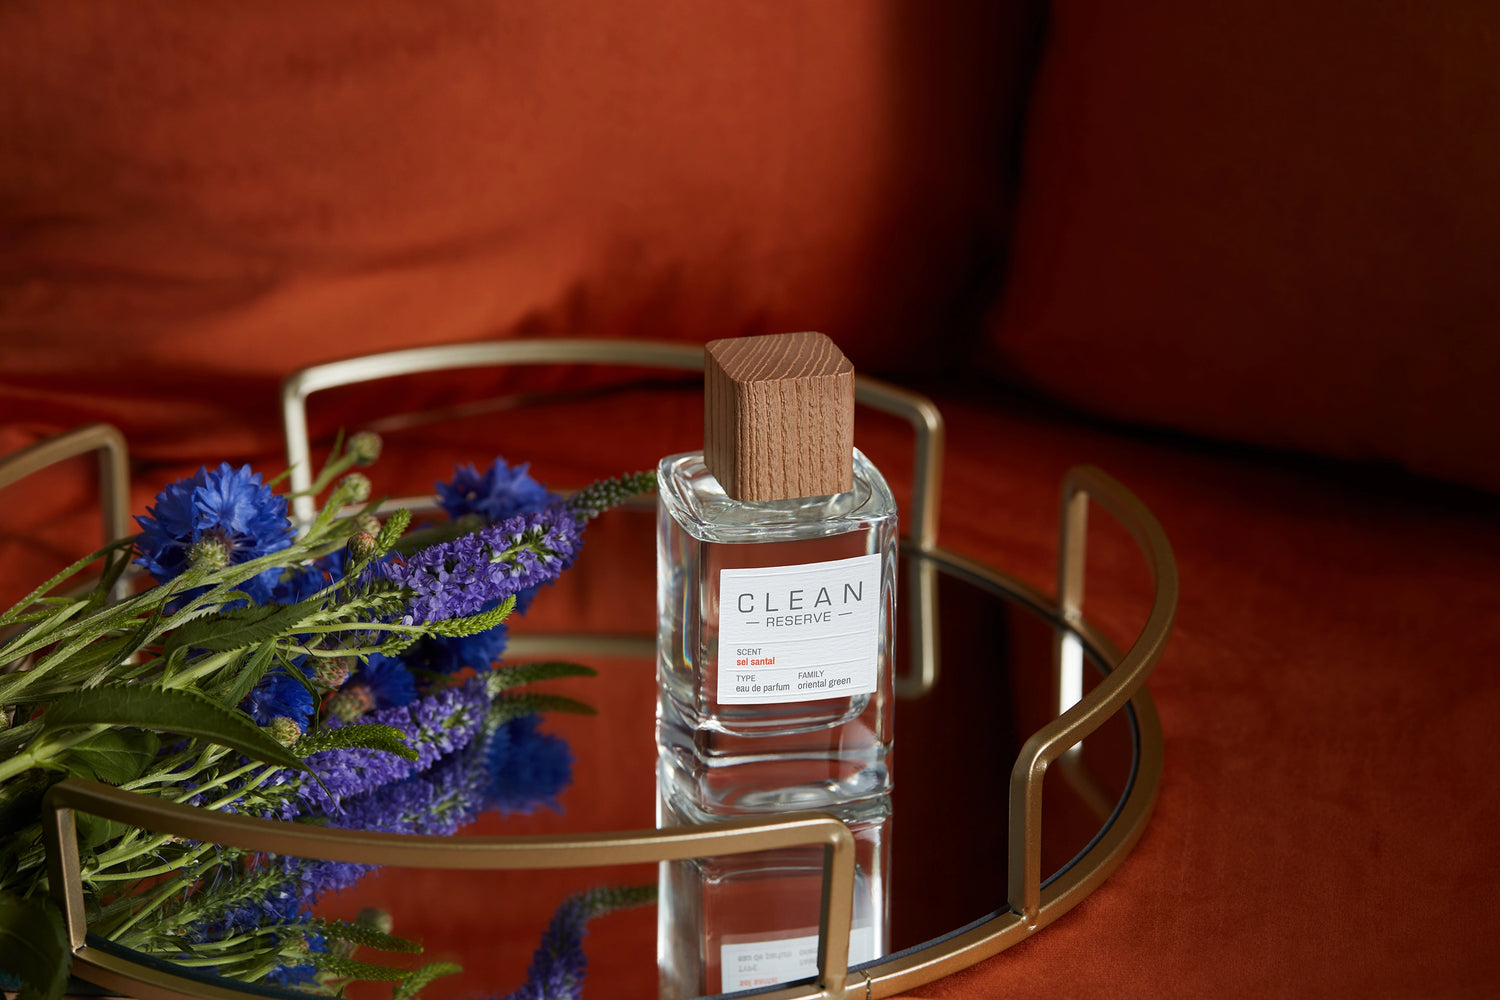 Clean Reserve Sel Sental Fragrance